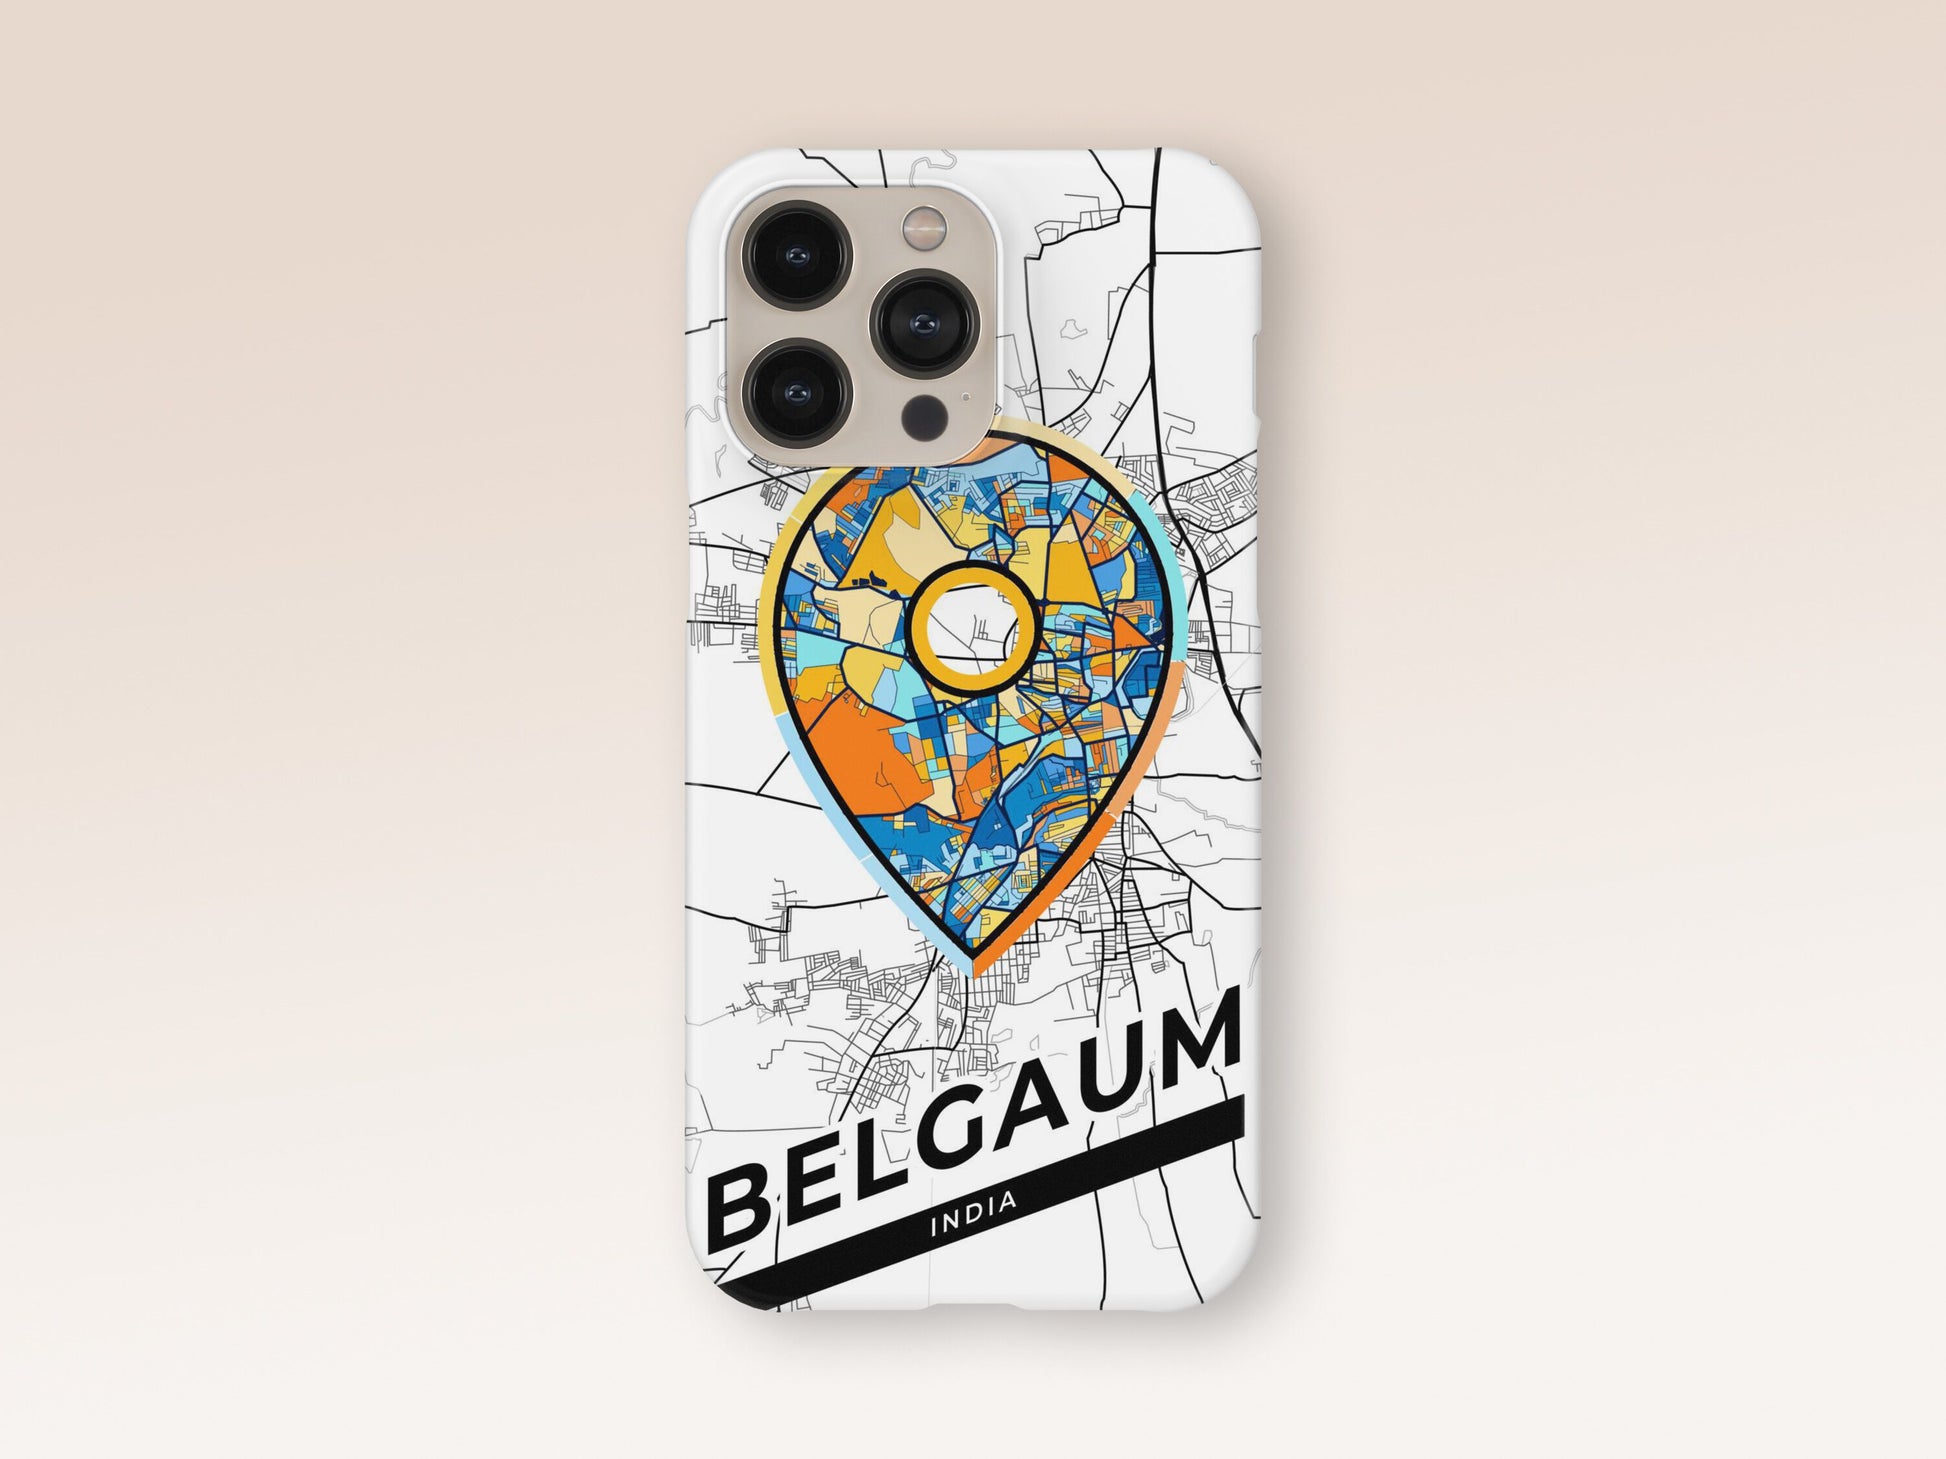 Belgaum India slim phone case with colorful icon. Birthday, wedding or housewarming gift. Couple match cases. 1